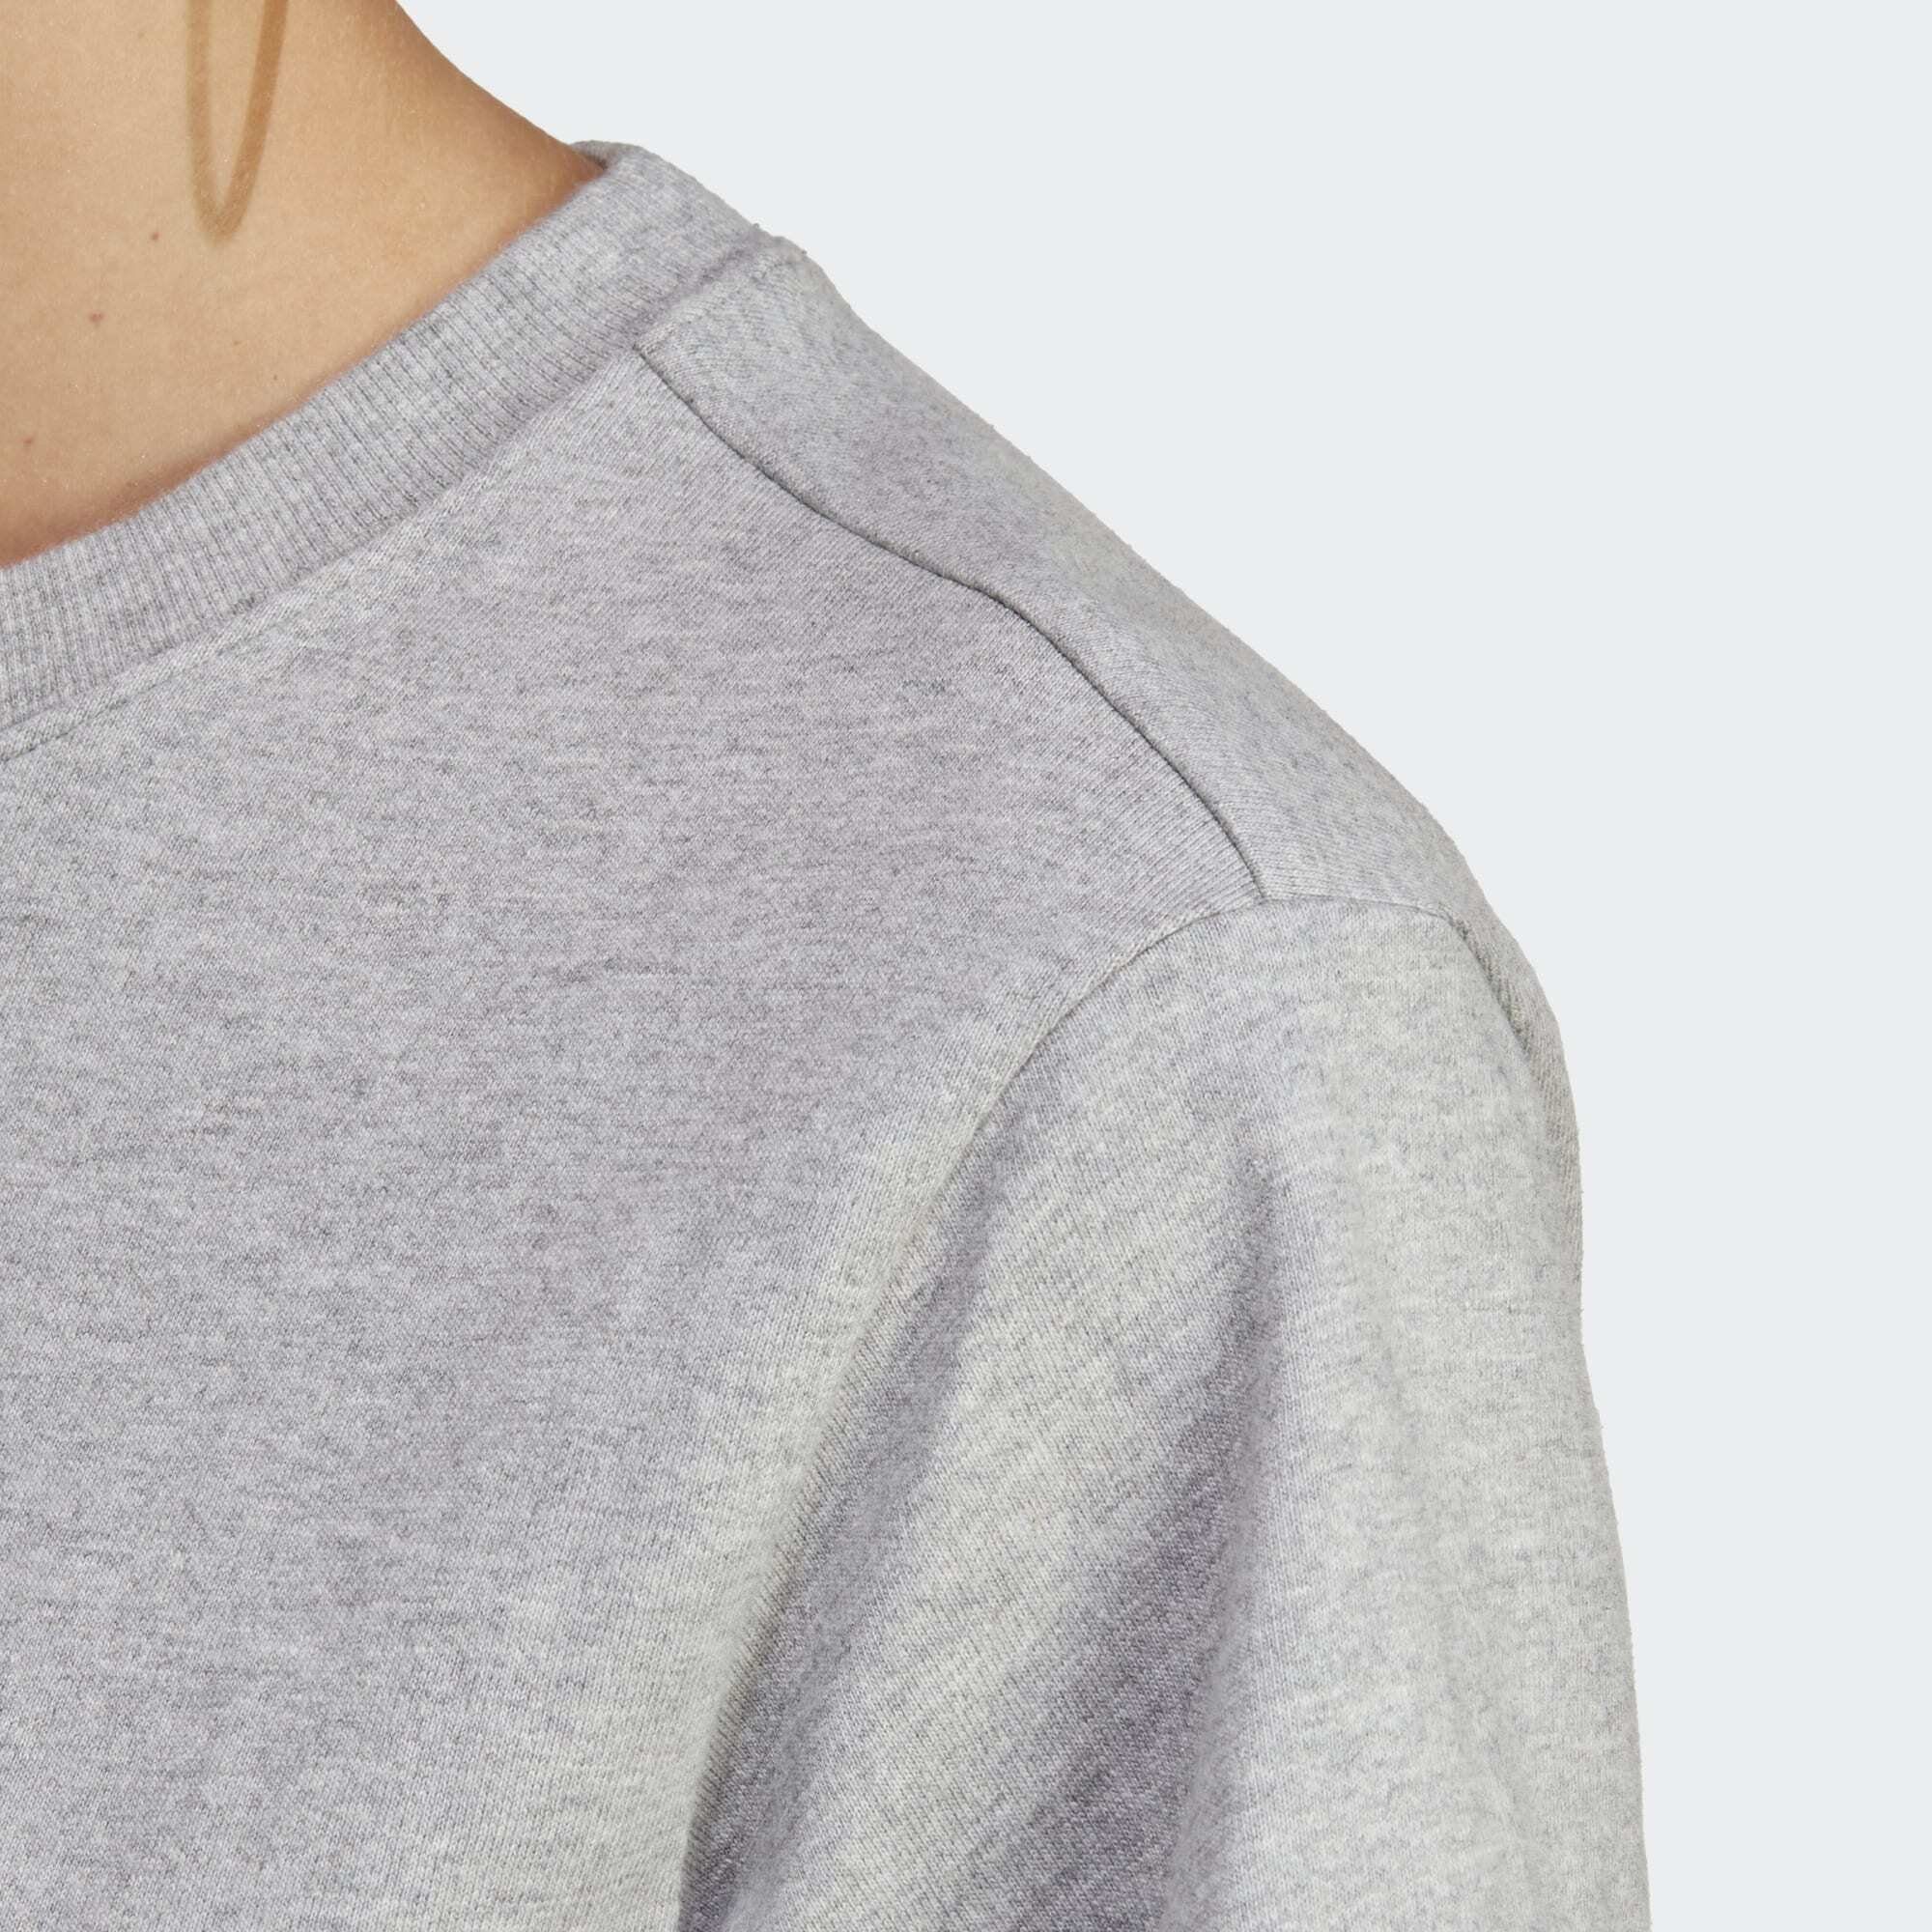 ESSENTIALS ADICOLOR REGULAR T-Shirt Originals T-SHIRT adidas Grey Heather Medium